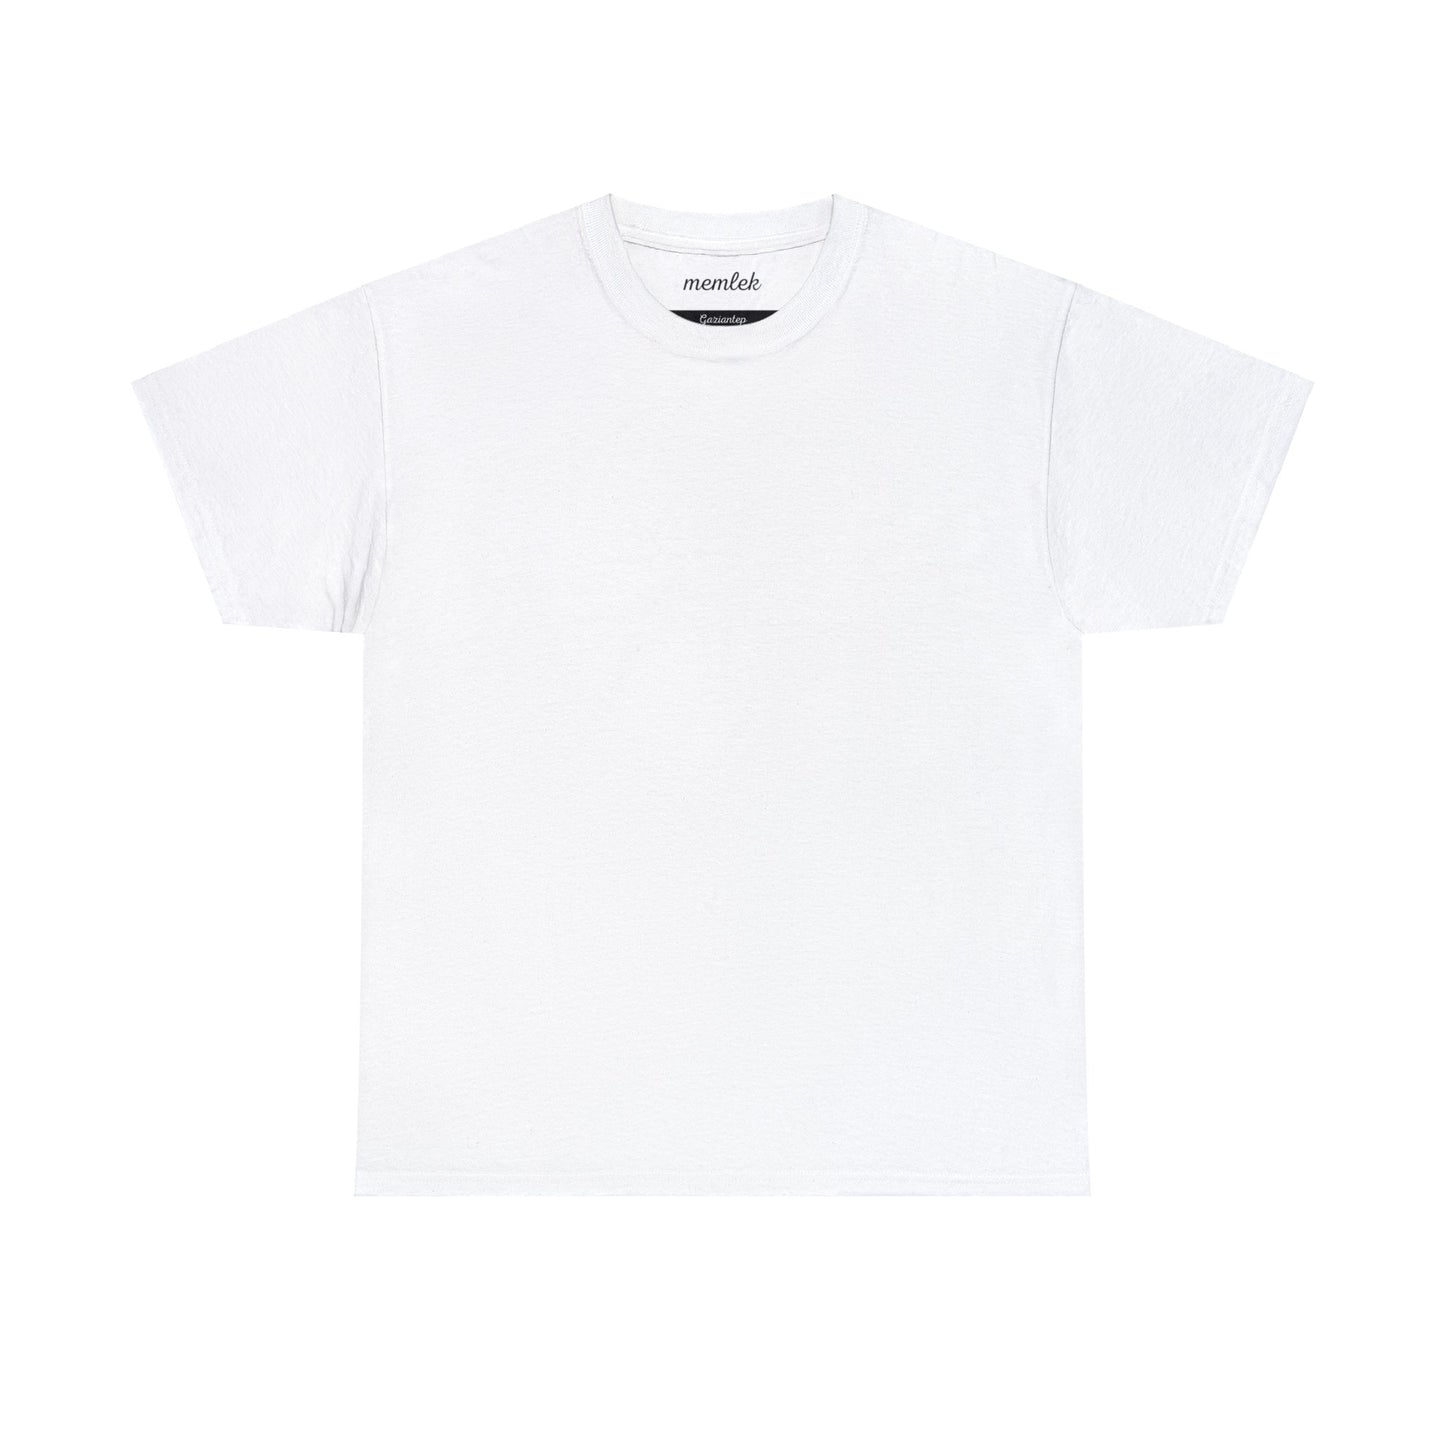 Kurt - 27 Gaziantep - T-Shirt - Back Print - Black/White